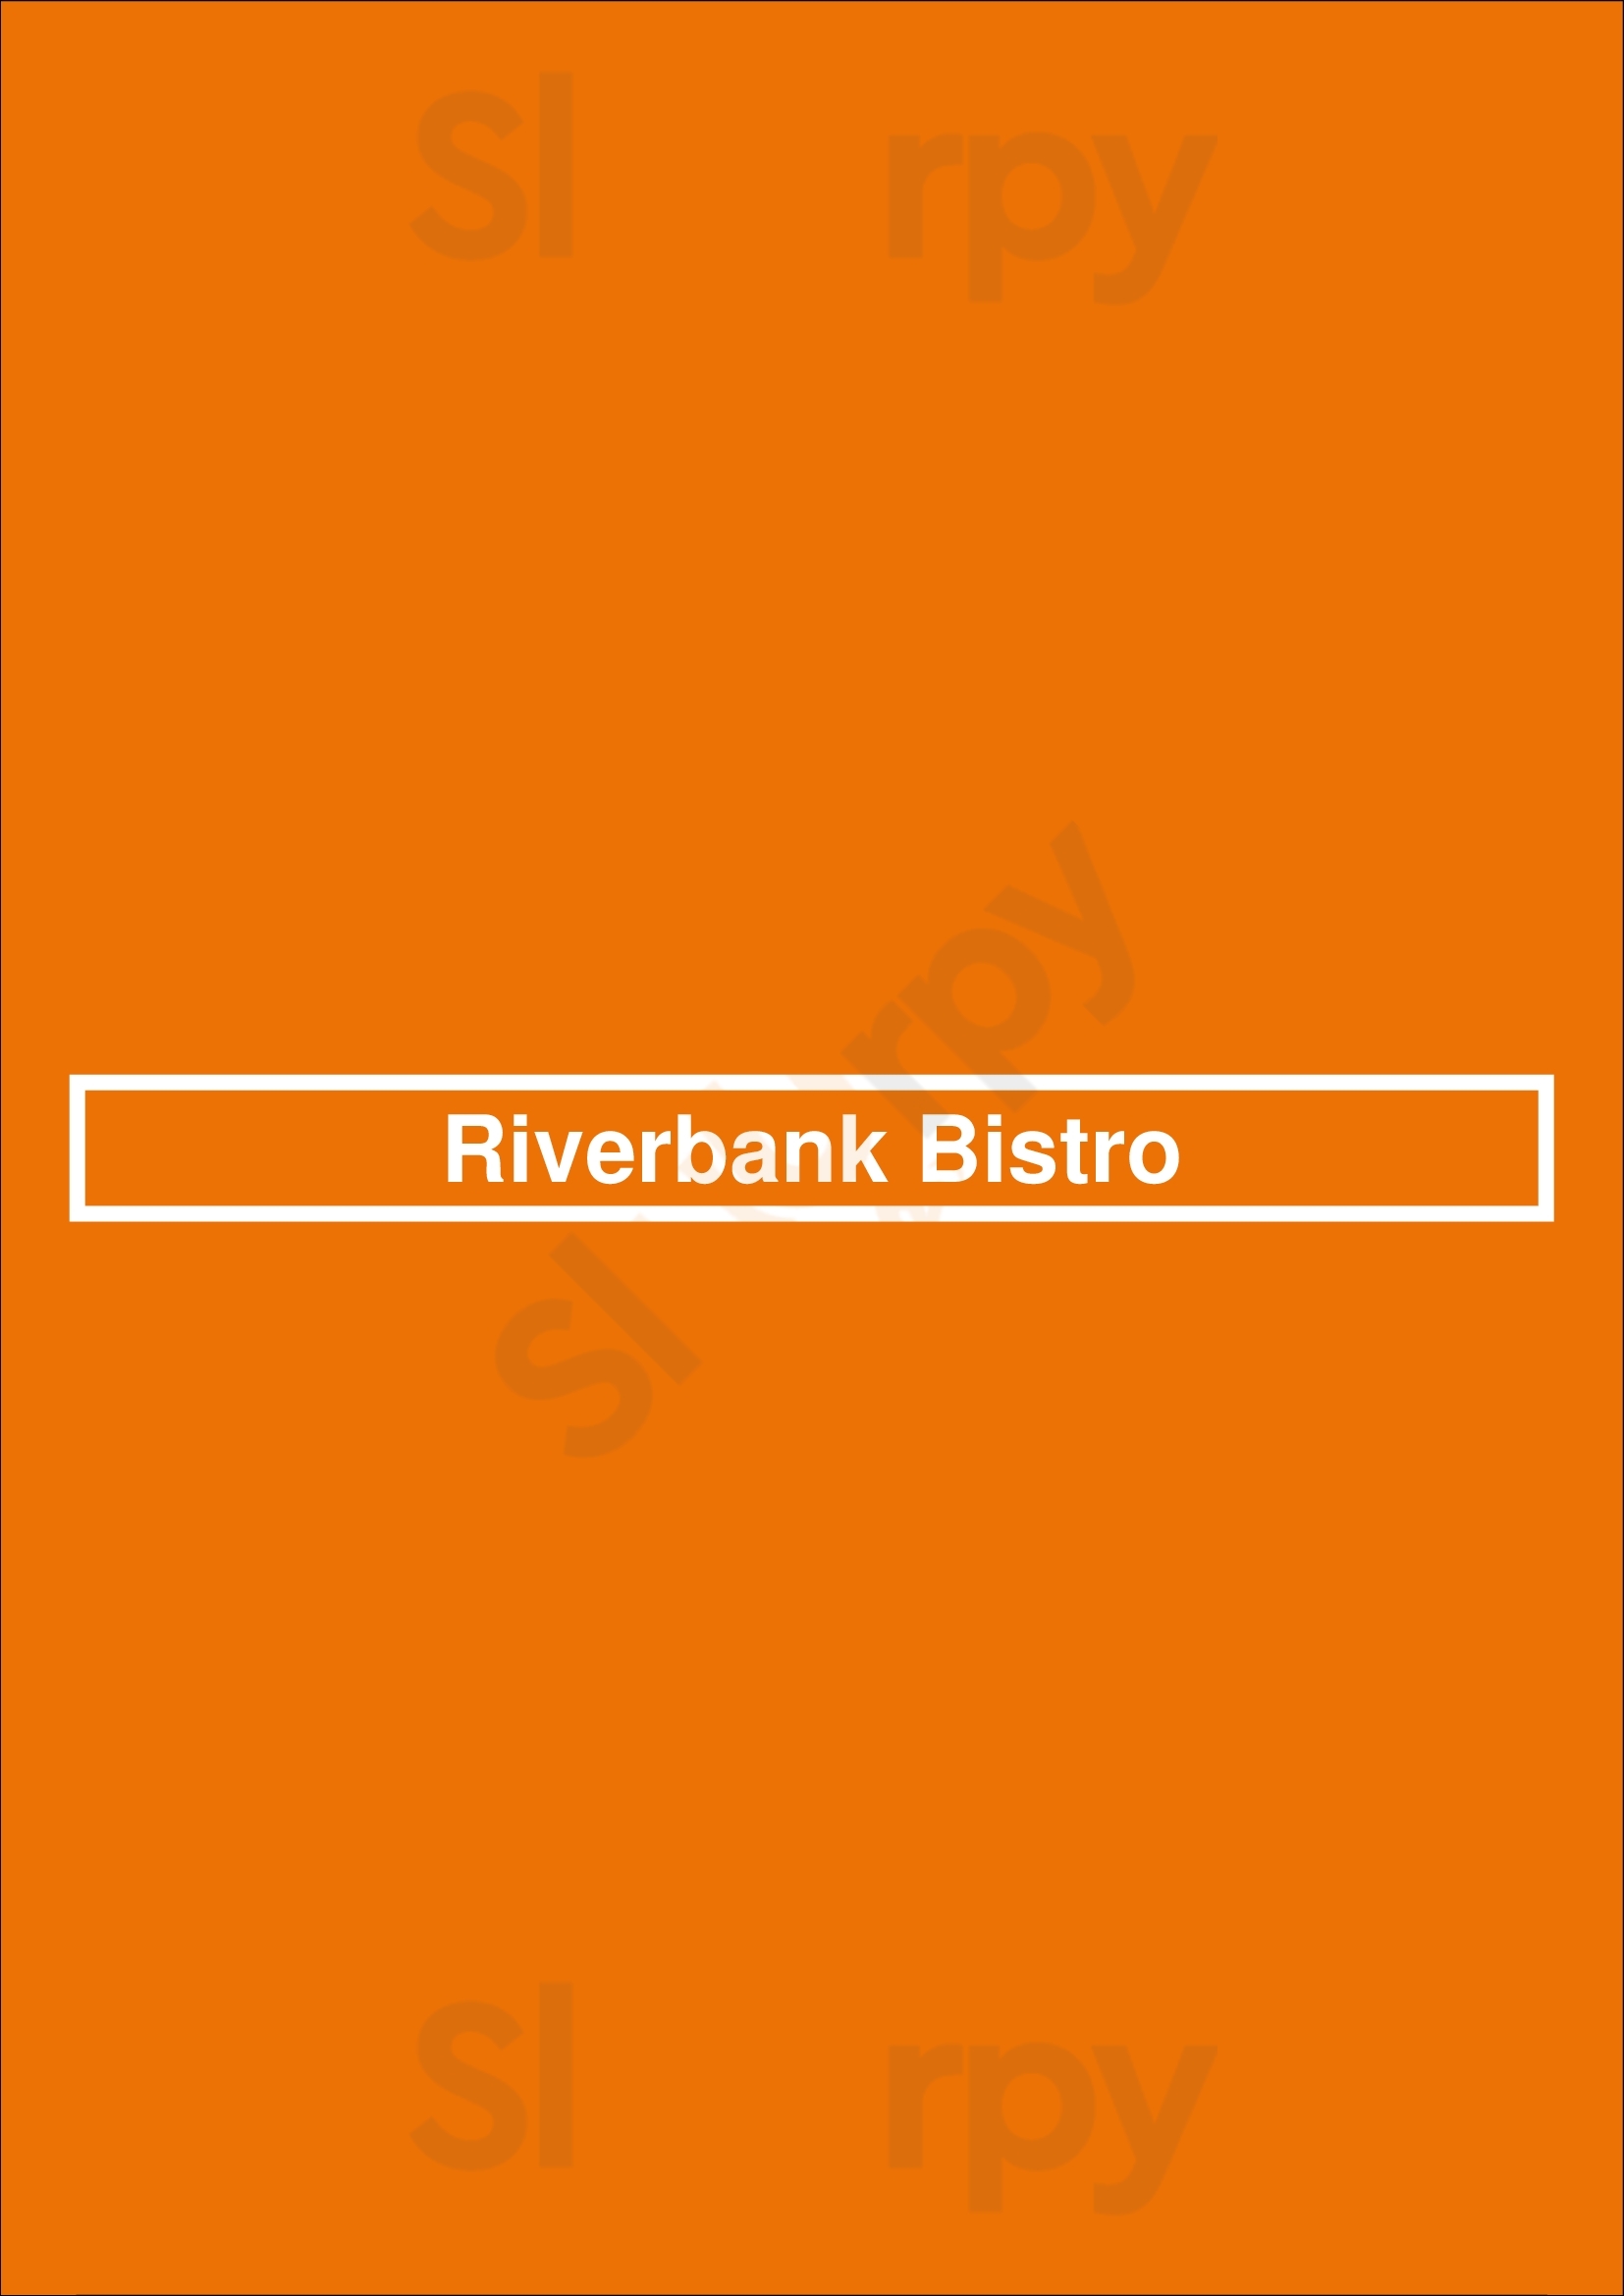 Riverbank Bistro St. Albert Menu - 1